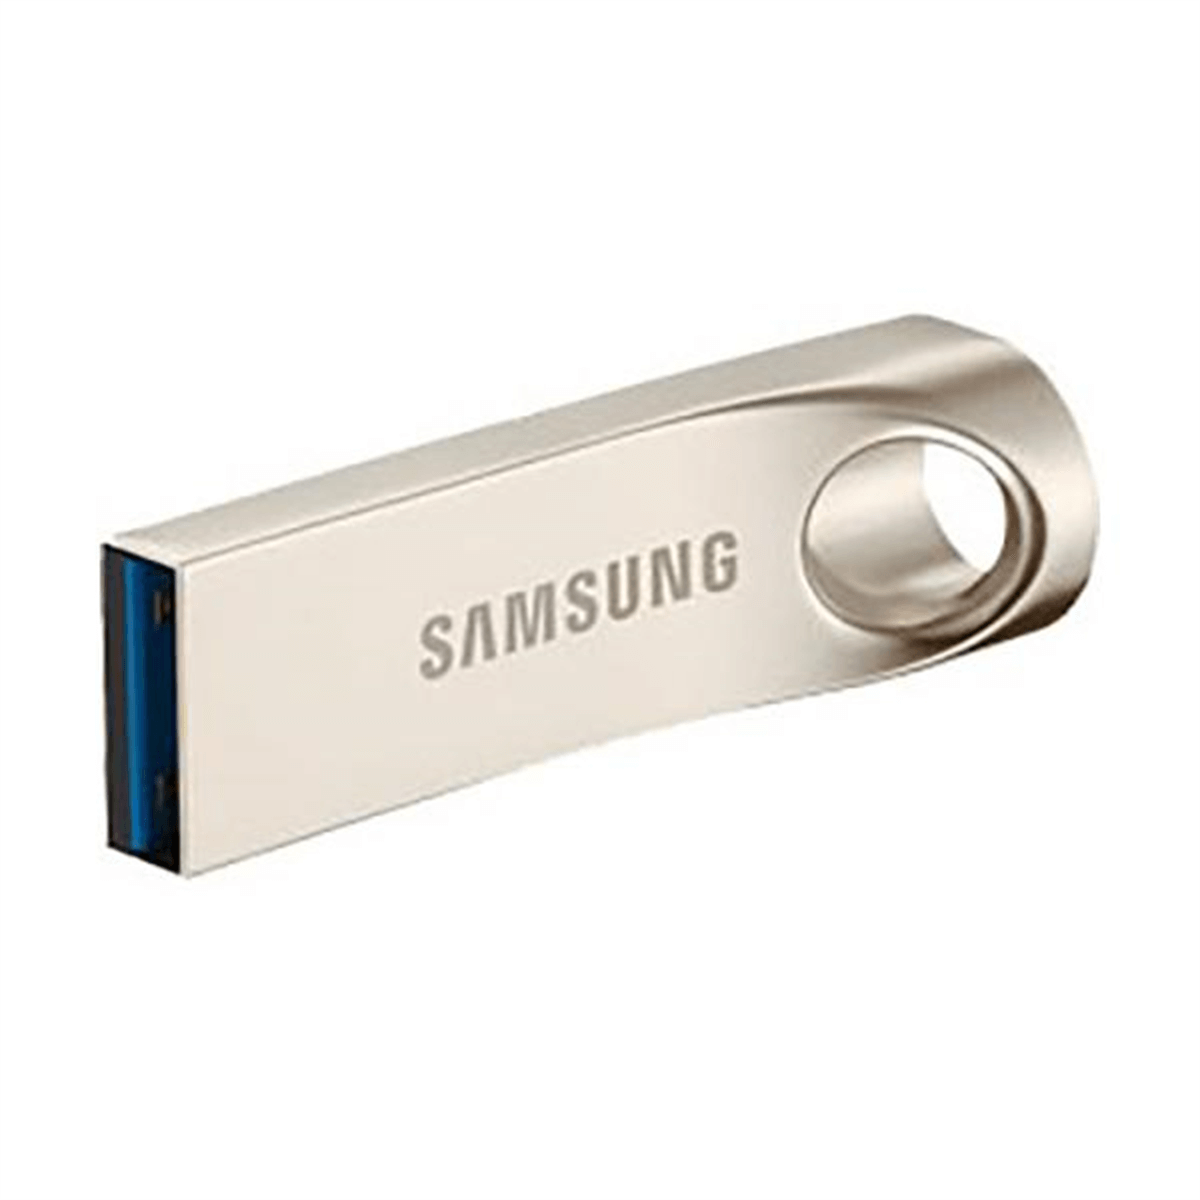 Samsung MUF-32BA 32Gb Usb3.0 Bellek (Flash Drive) | Mobicaps